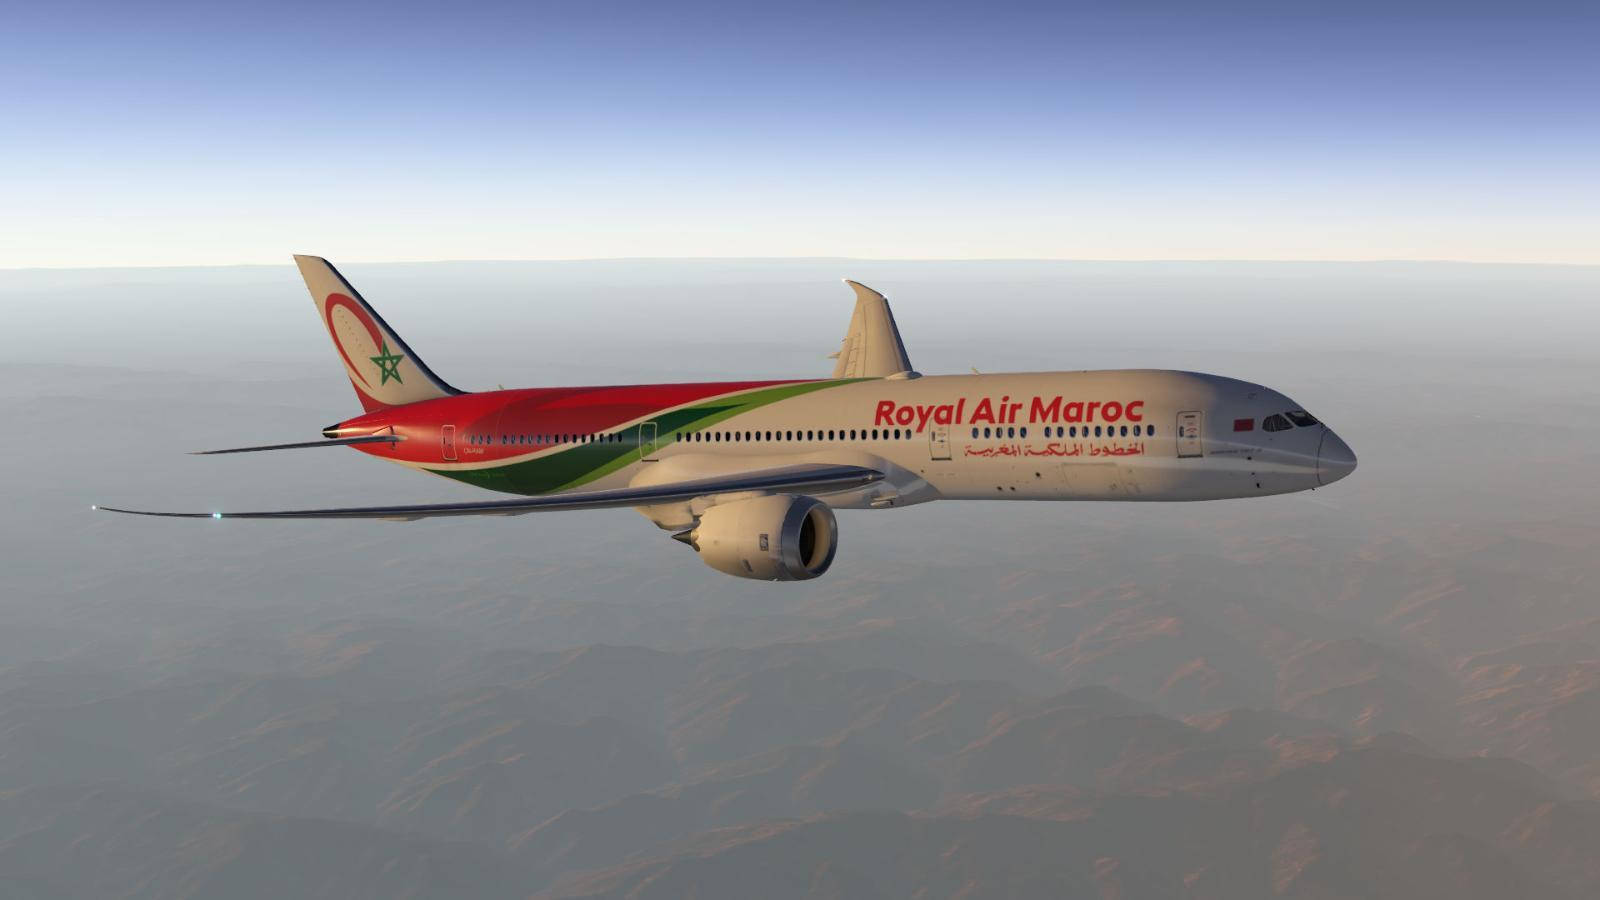 Royal Air Maroc Passenger Aircraft In Flight Wallpaper